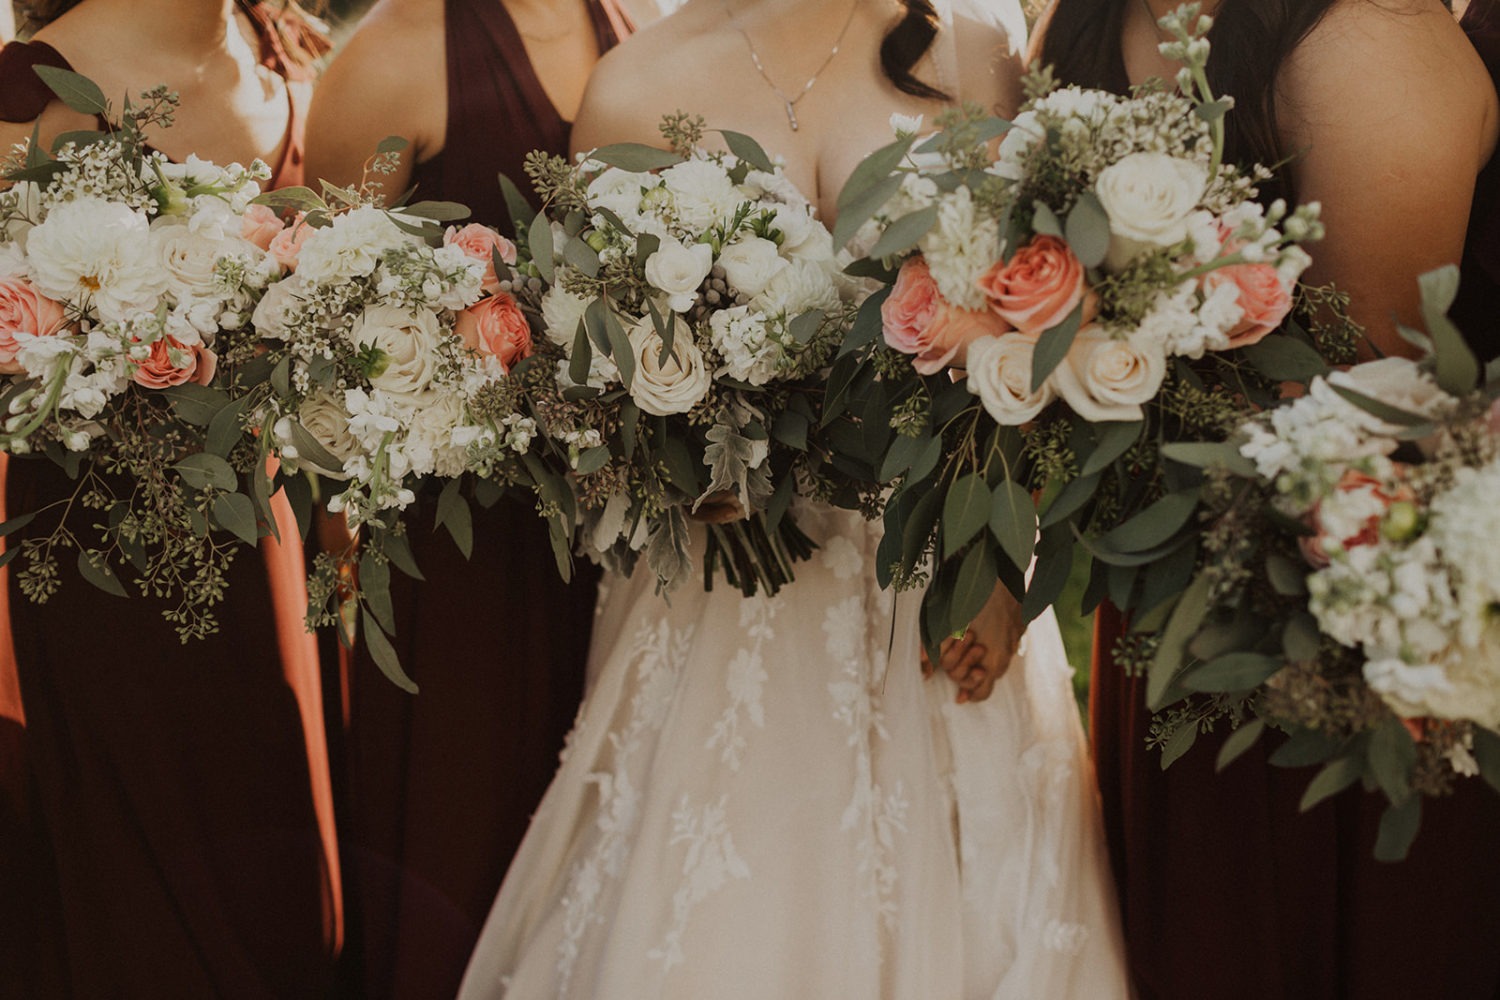 Bridesmaids surround bride holding wedding bouquets